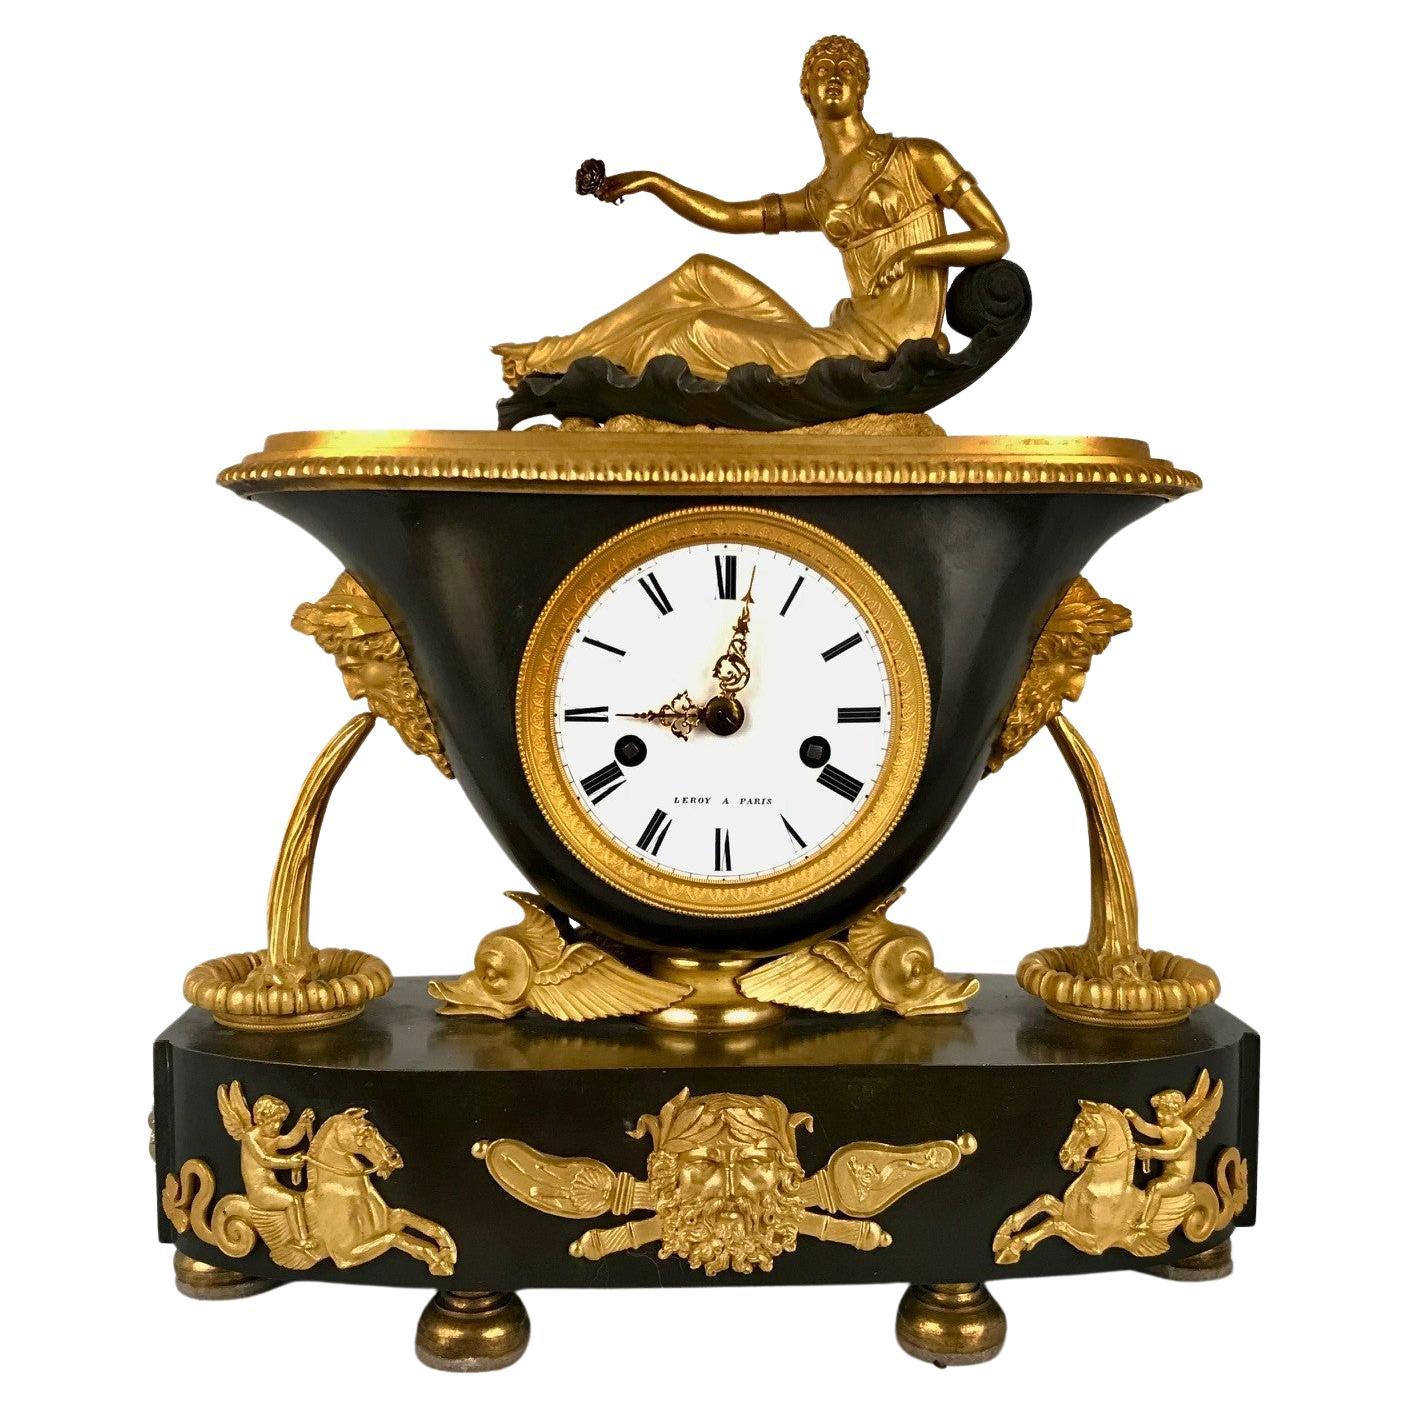 Empire Period Mantle Clock by Leroy a Paris For Sale